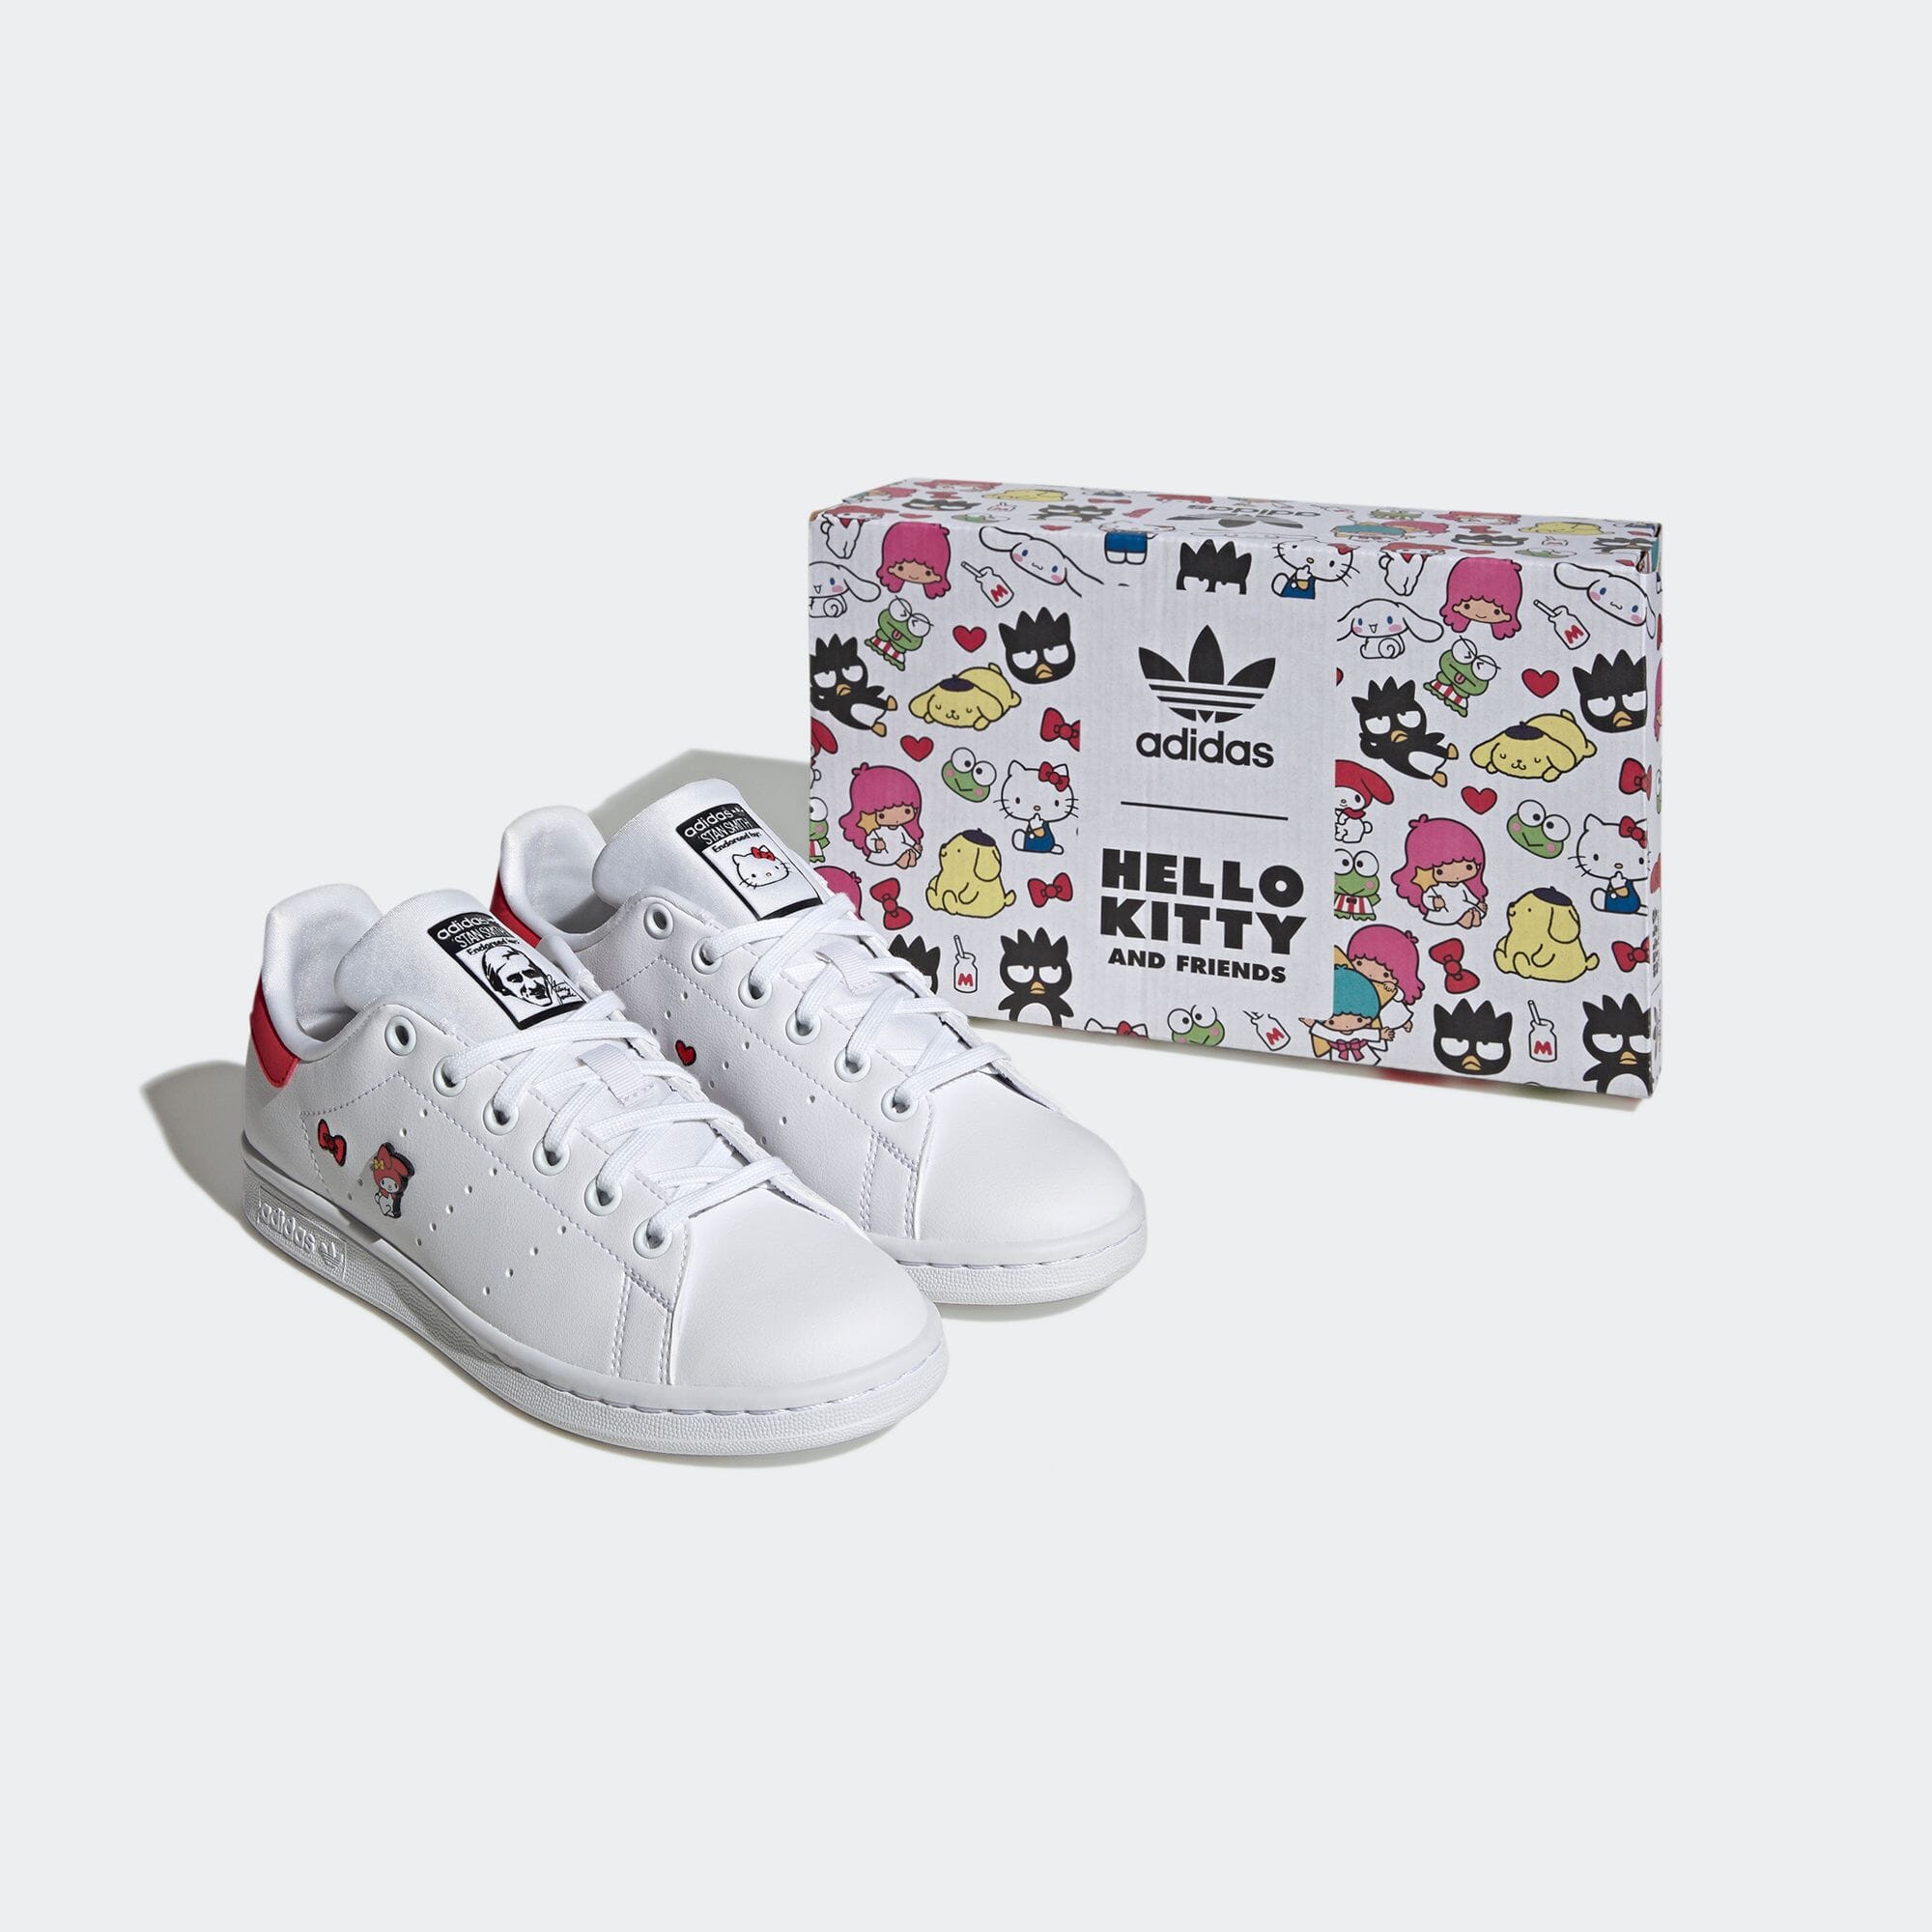 adidas Originals × Hello Kitty and Friends スタンスミス / Stan Smith レディース オリジナルス